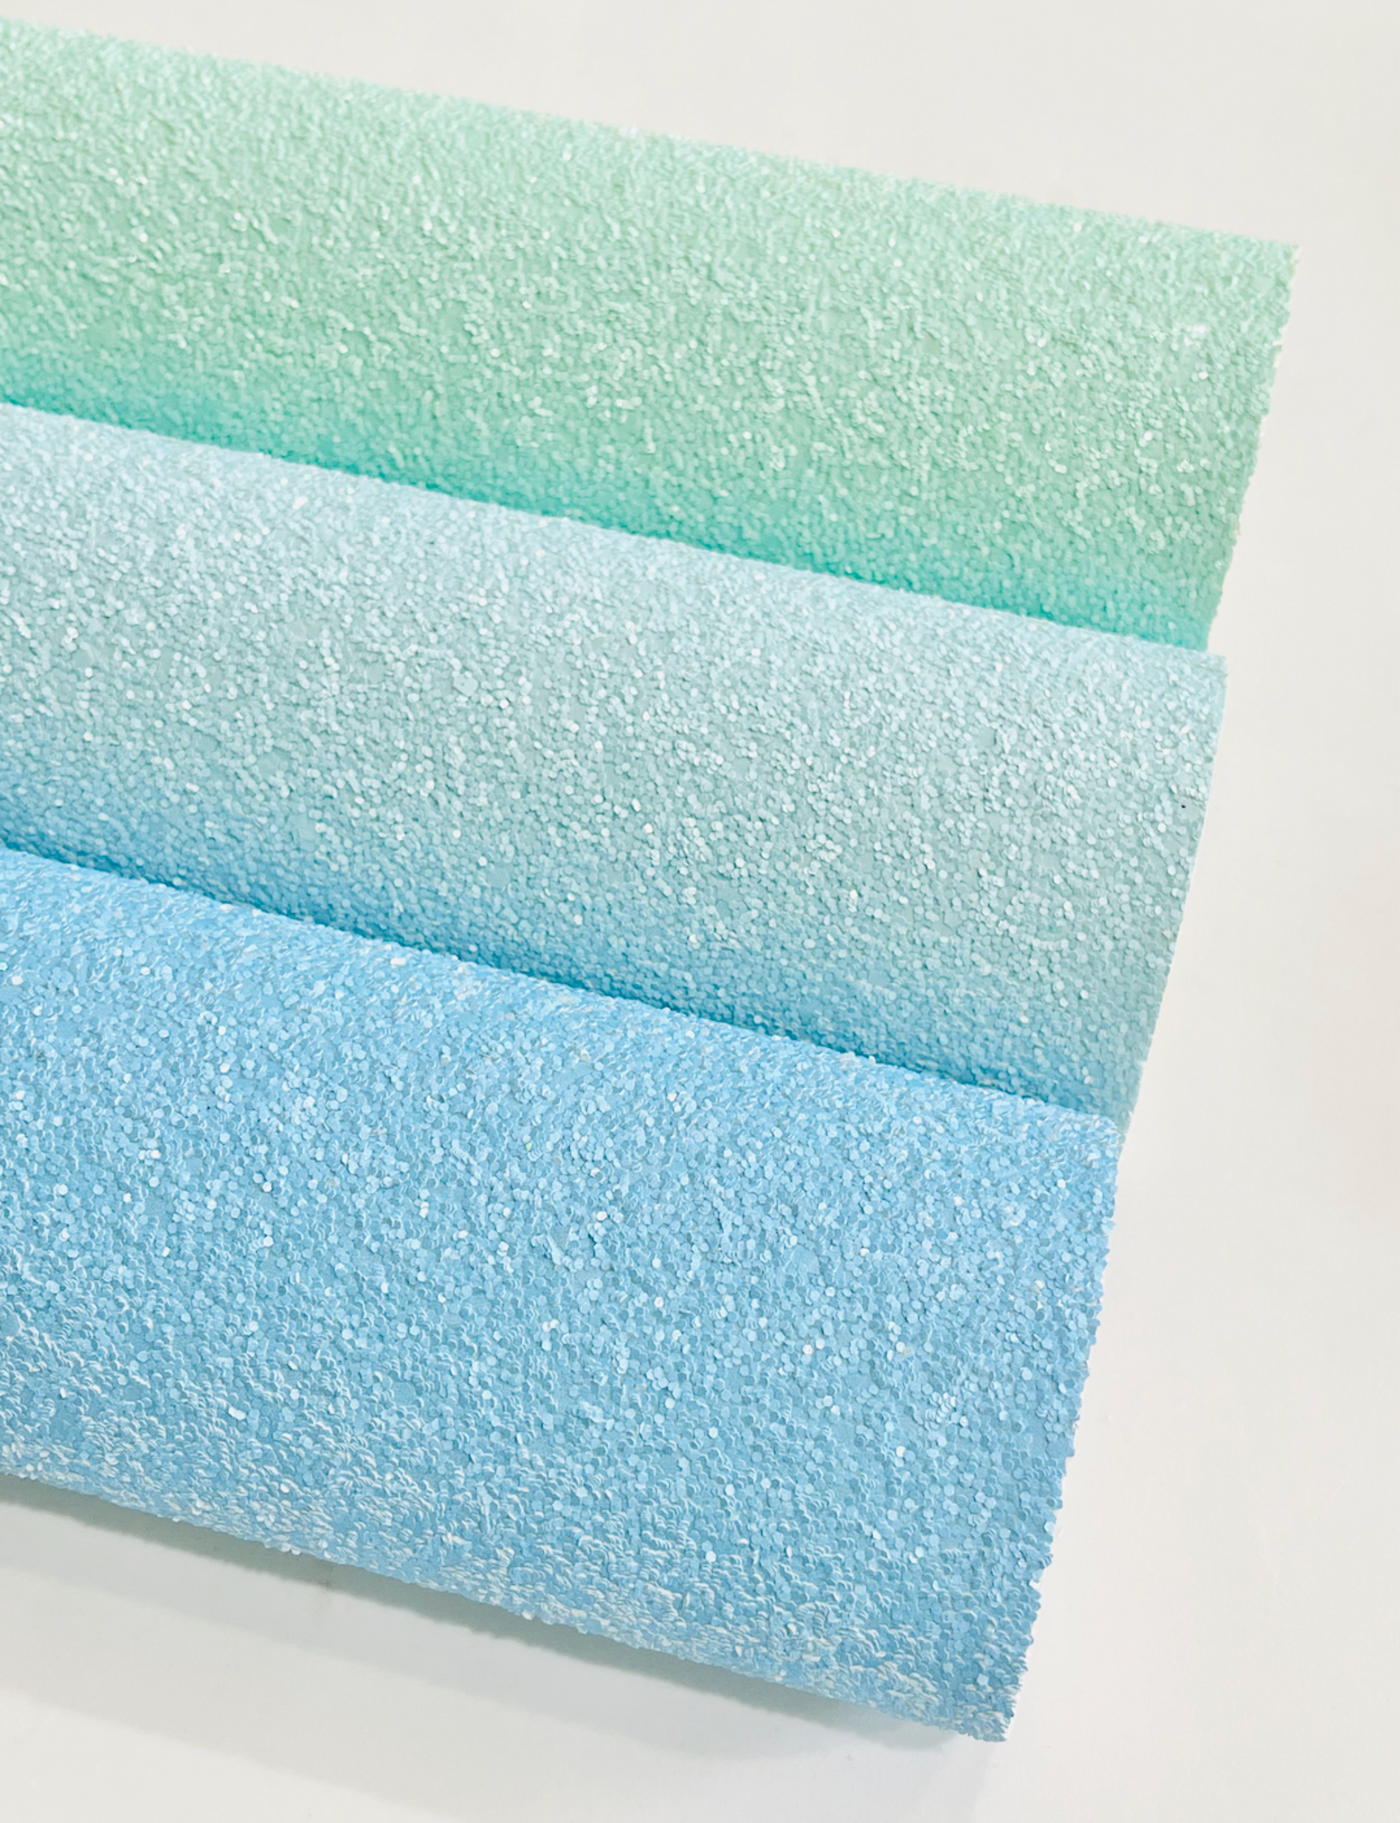 3 Sheet Bundle - Blue Chunky Glitter Fabric Sheets